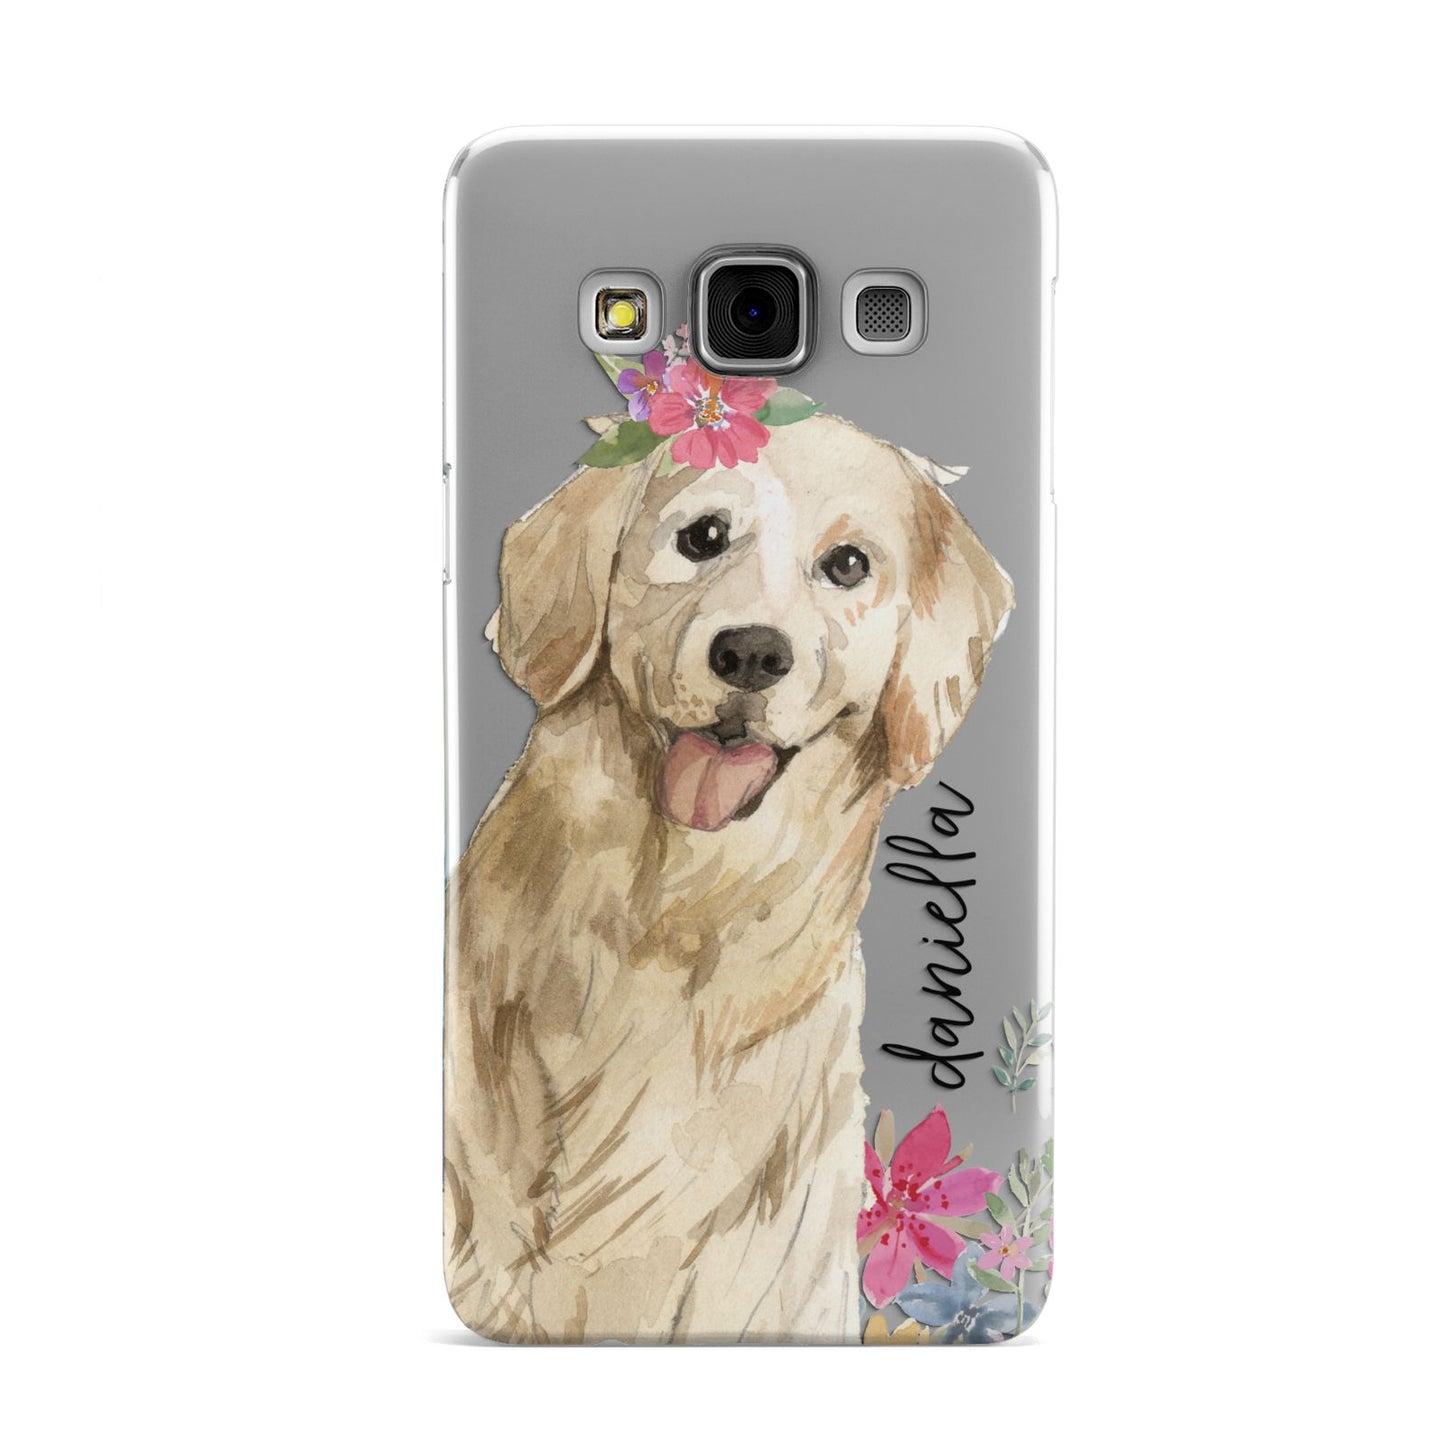 Personalised Golden Retriever Dog Samsung Galaxy A3 Case